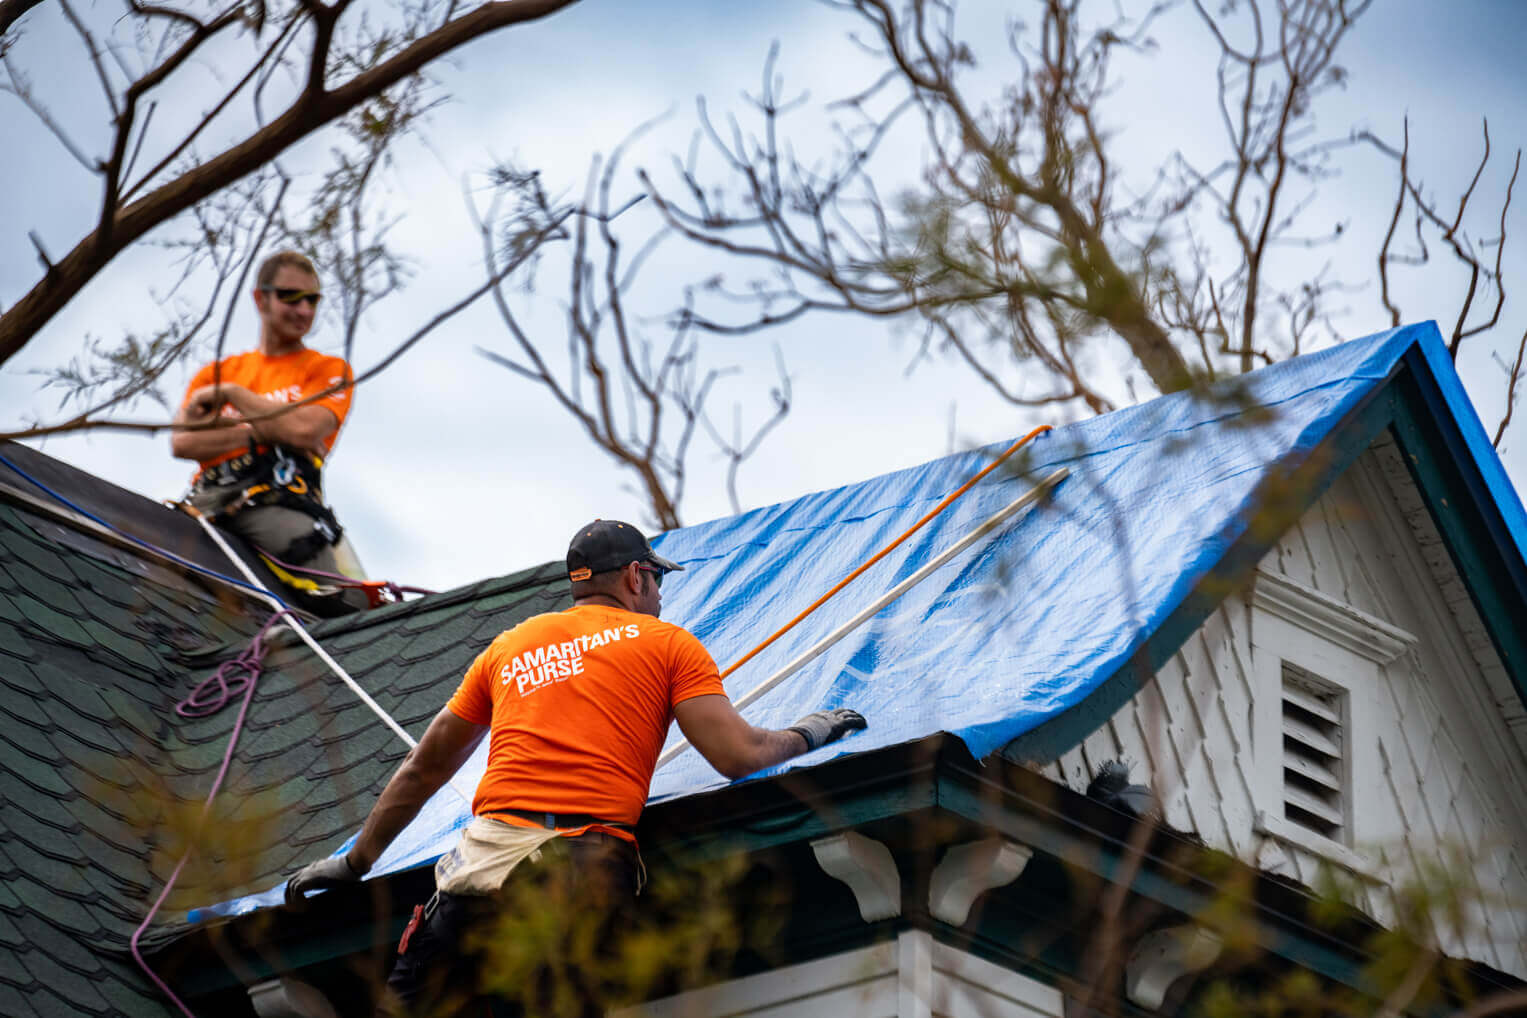 Since September, Samaritan's Purse volunteers have been hard at work helping homeowners after Hurricane Ian.